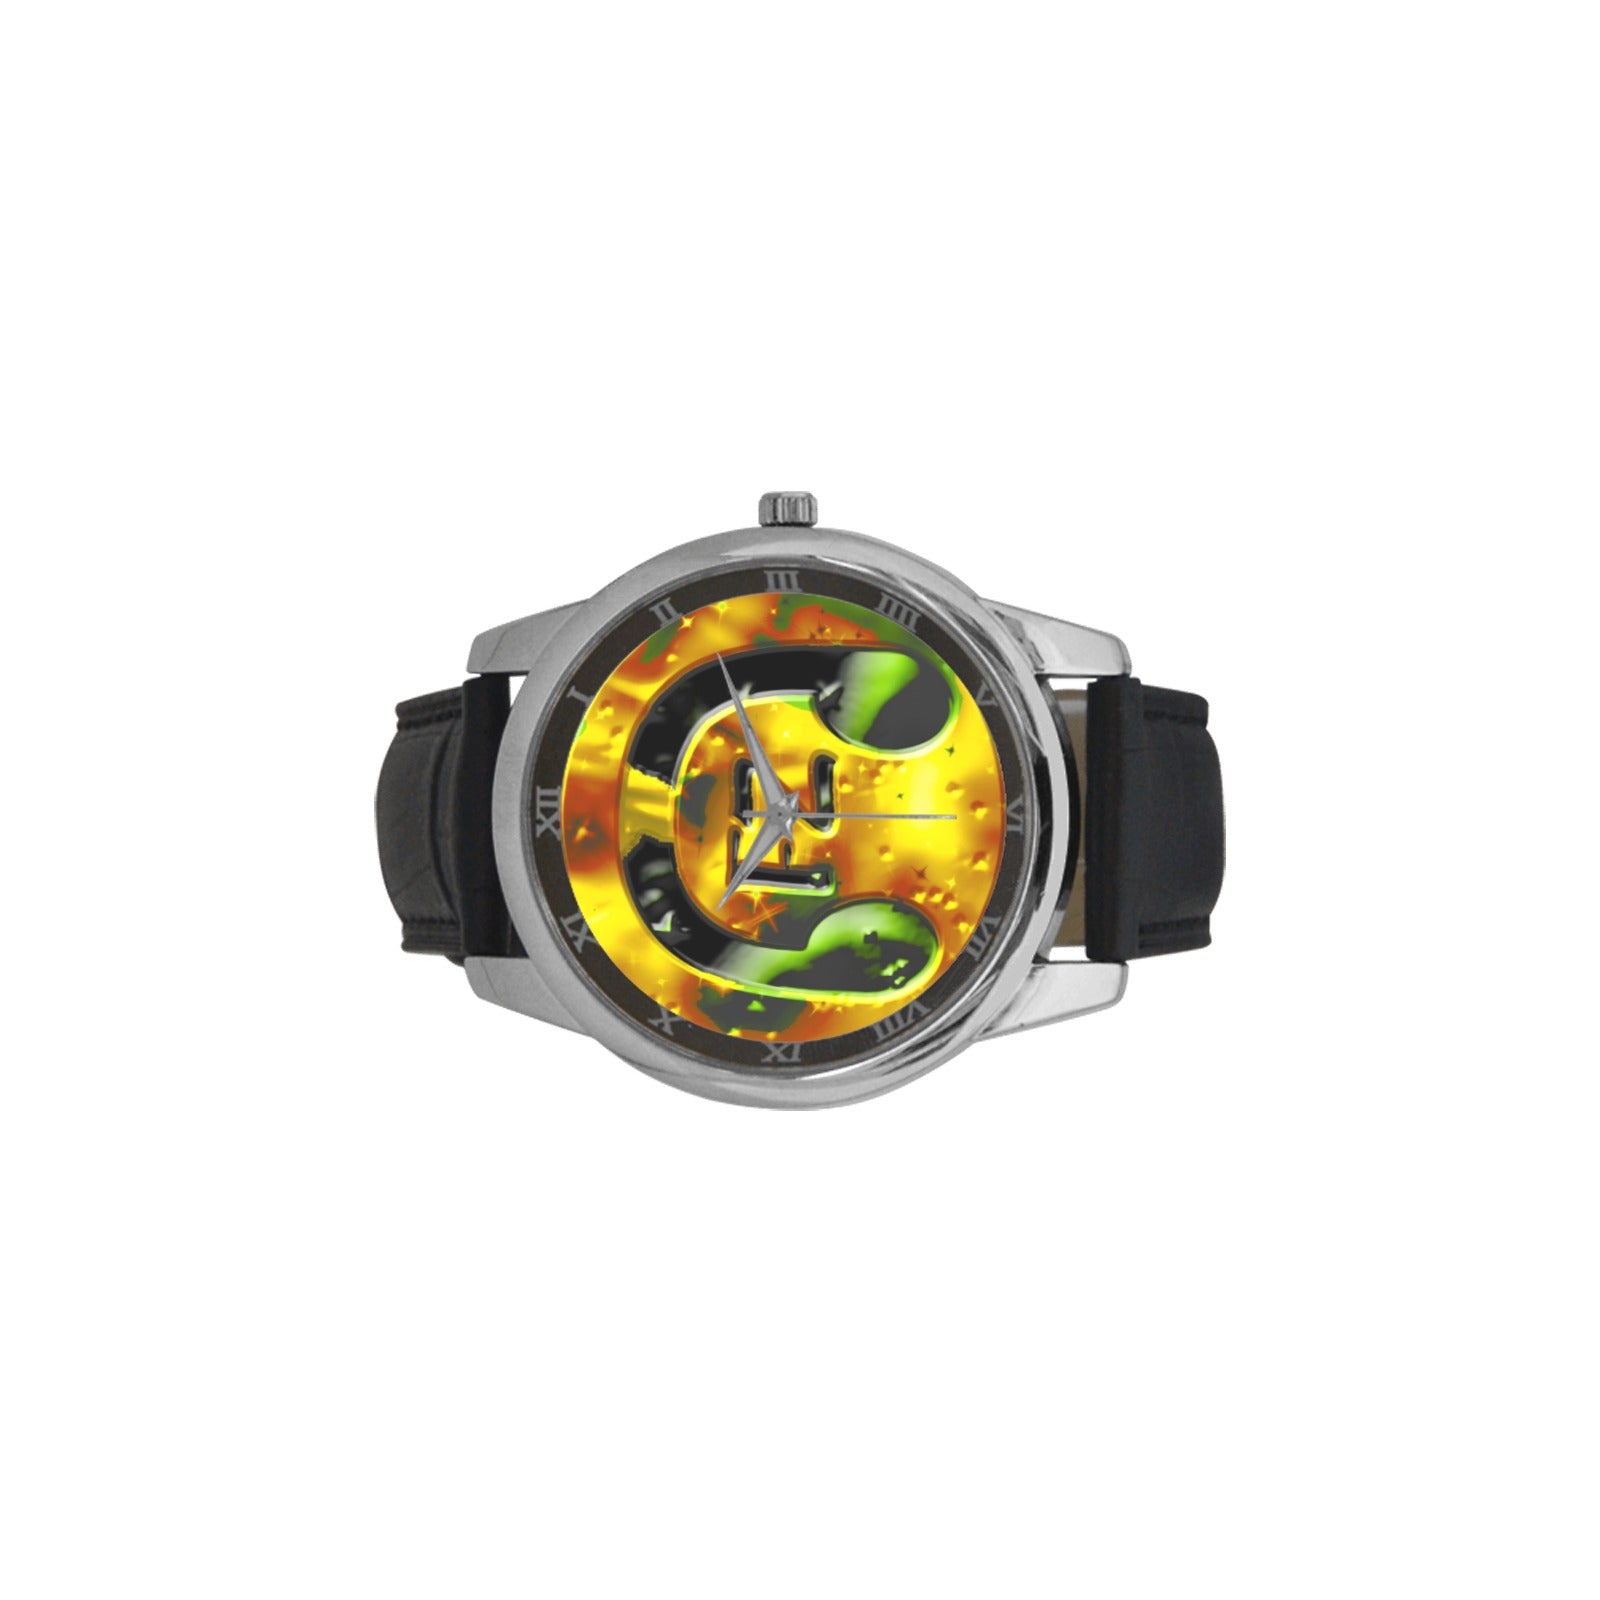 fz original watch - yellow men's leather strap large dial watch (model 213)